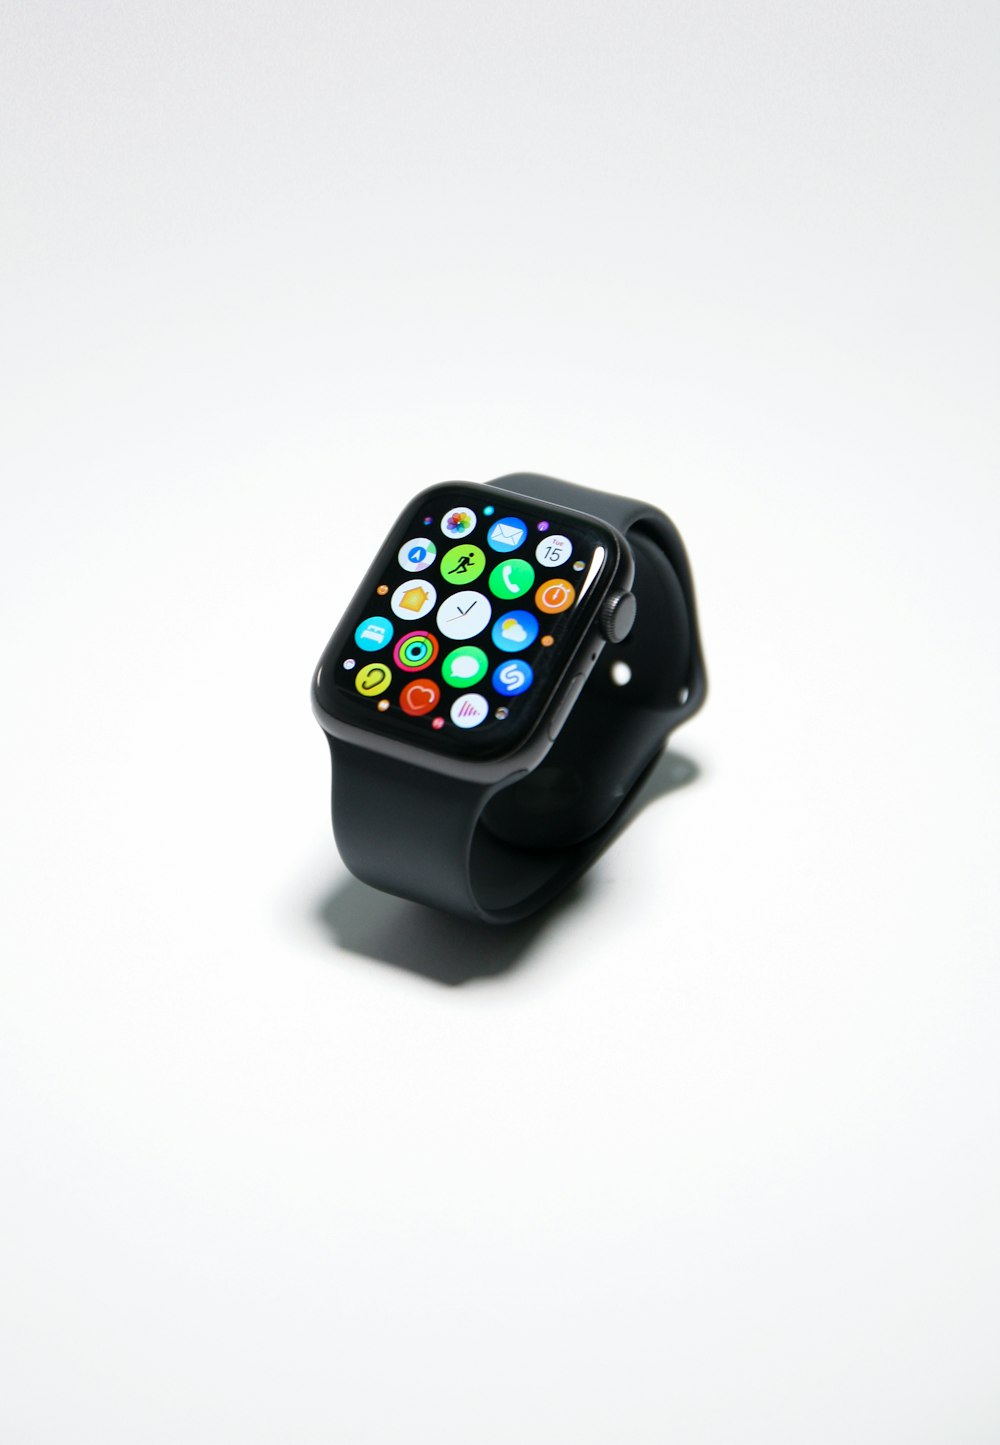 black smart watch with white background photo – Free Digital Image on  Unsplash